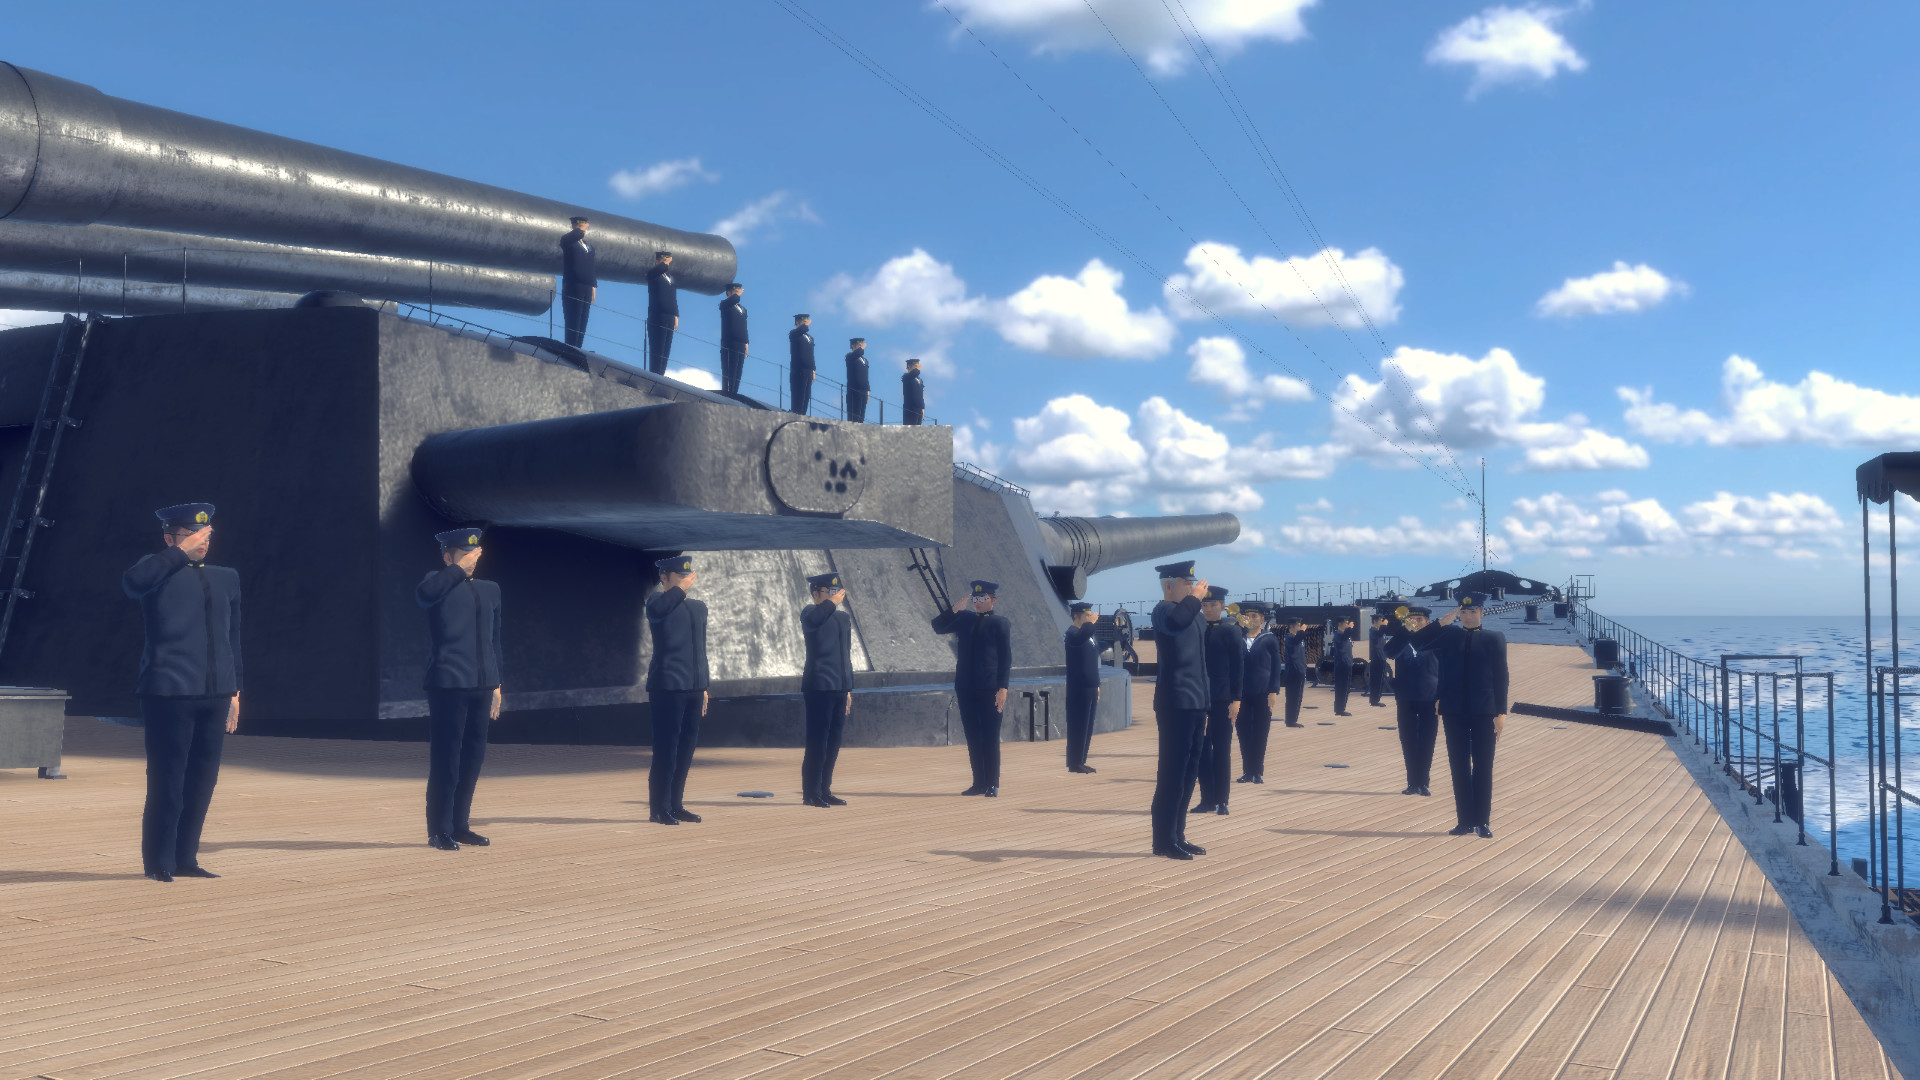 VR Battleship YAMATO screenshot